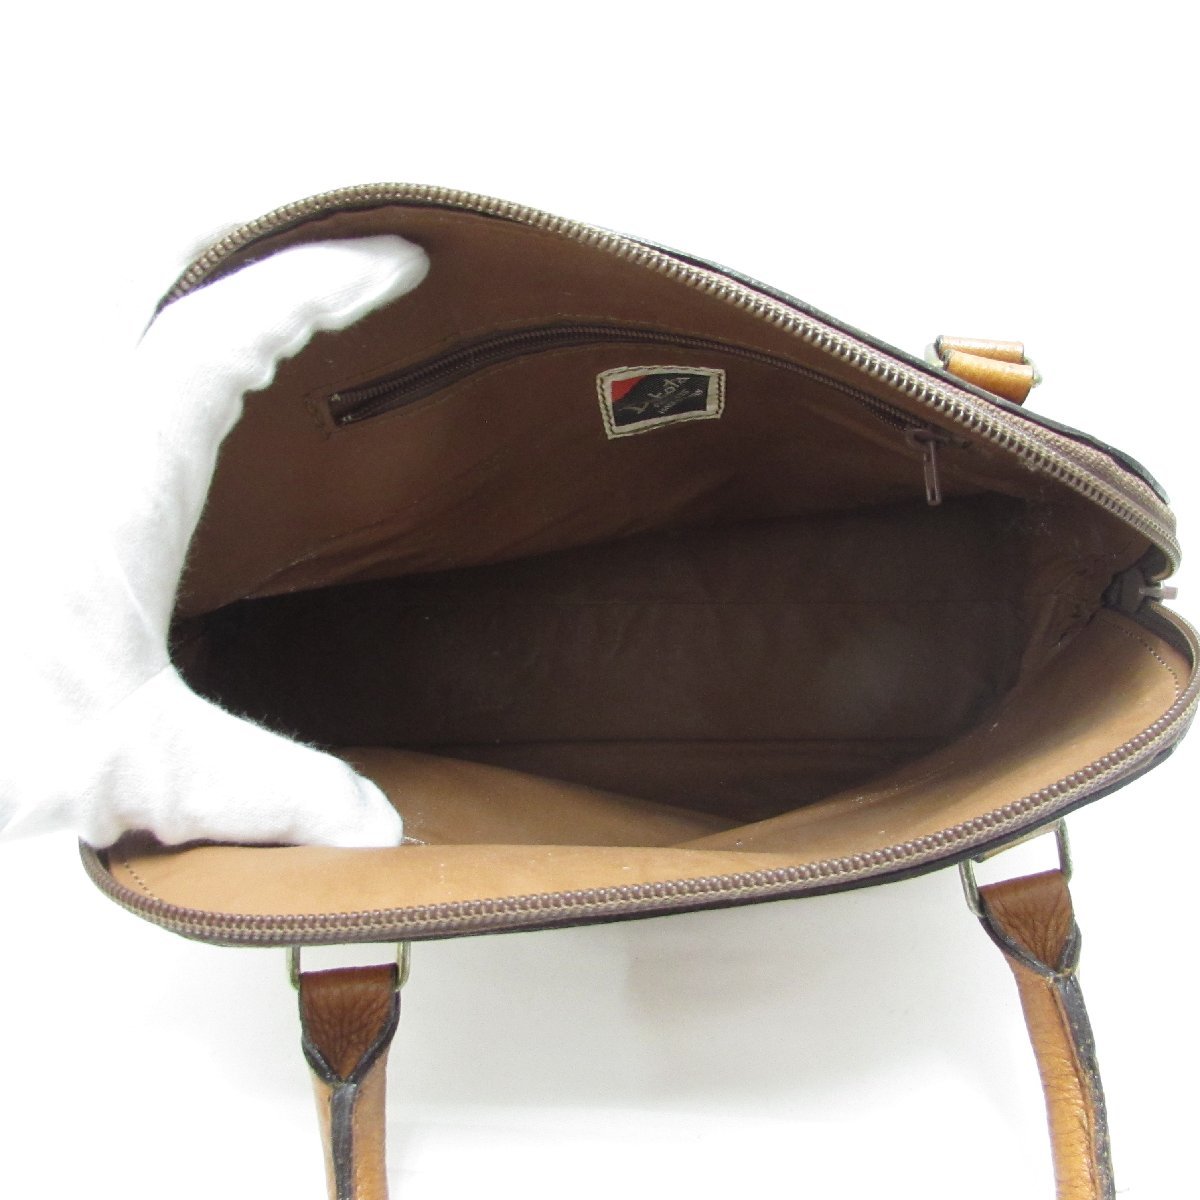  dakota Dakota handbag leather Brown Mini bag cow leather USED /2211D